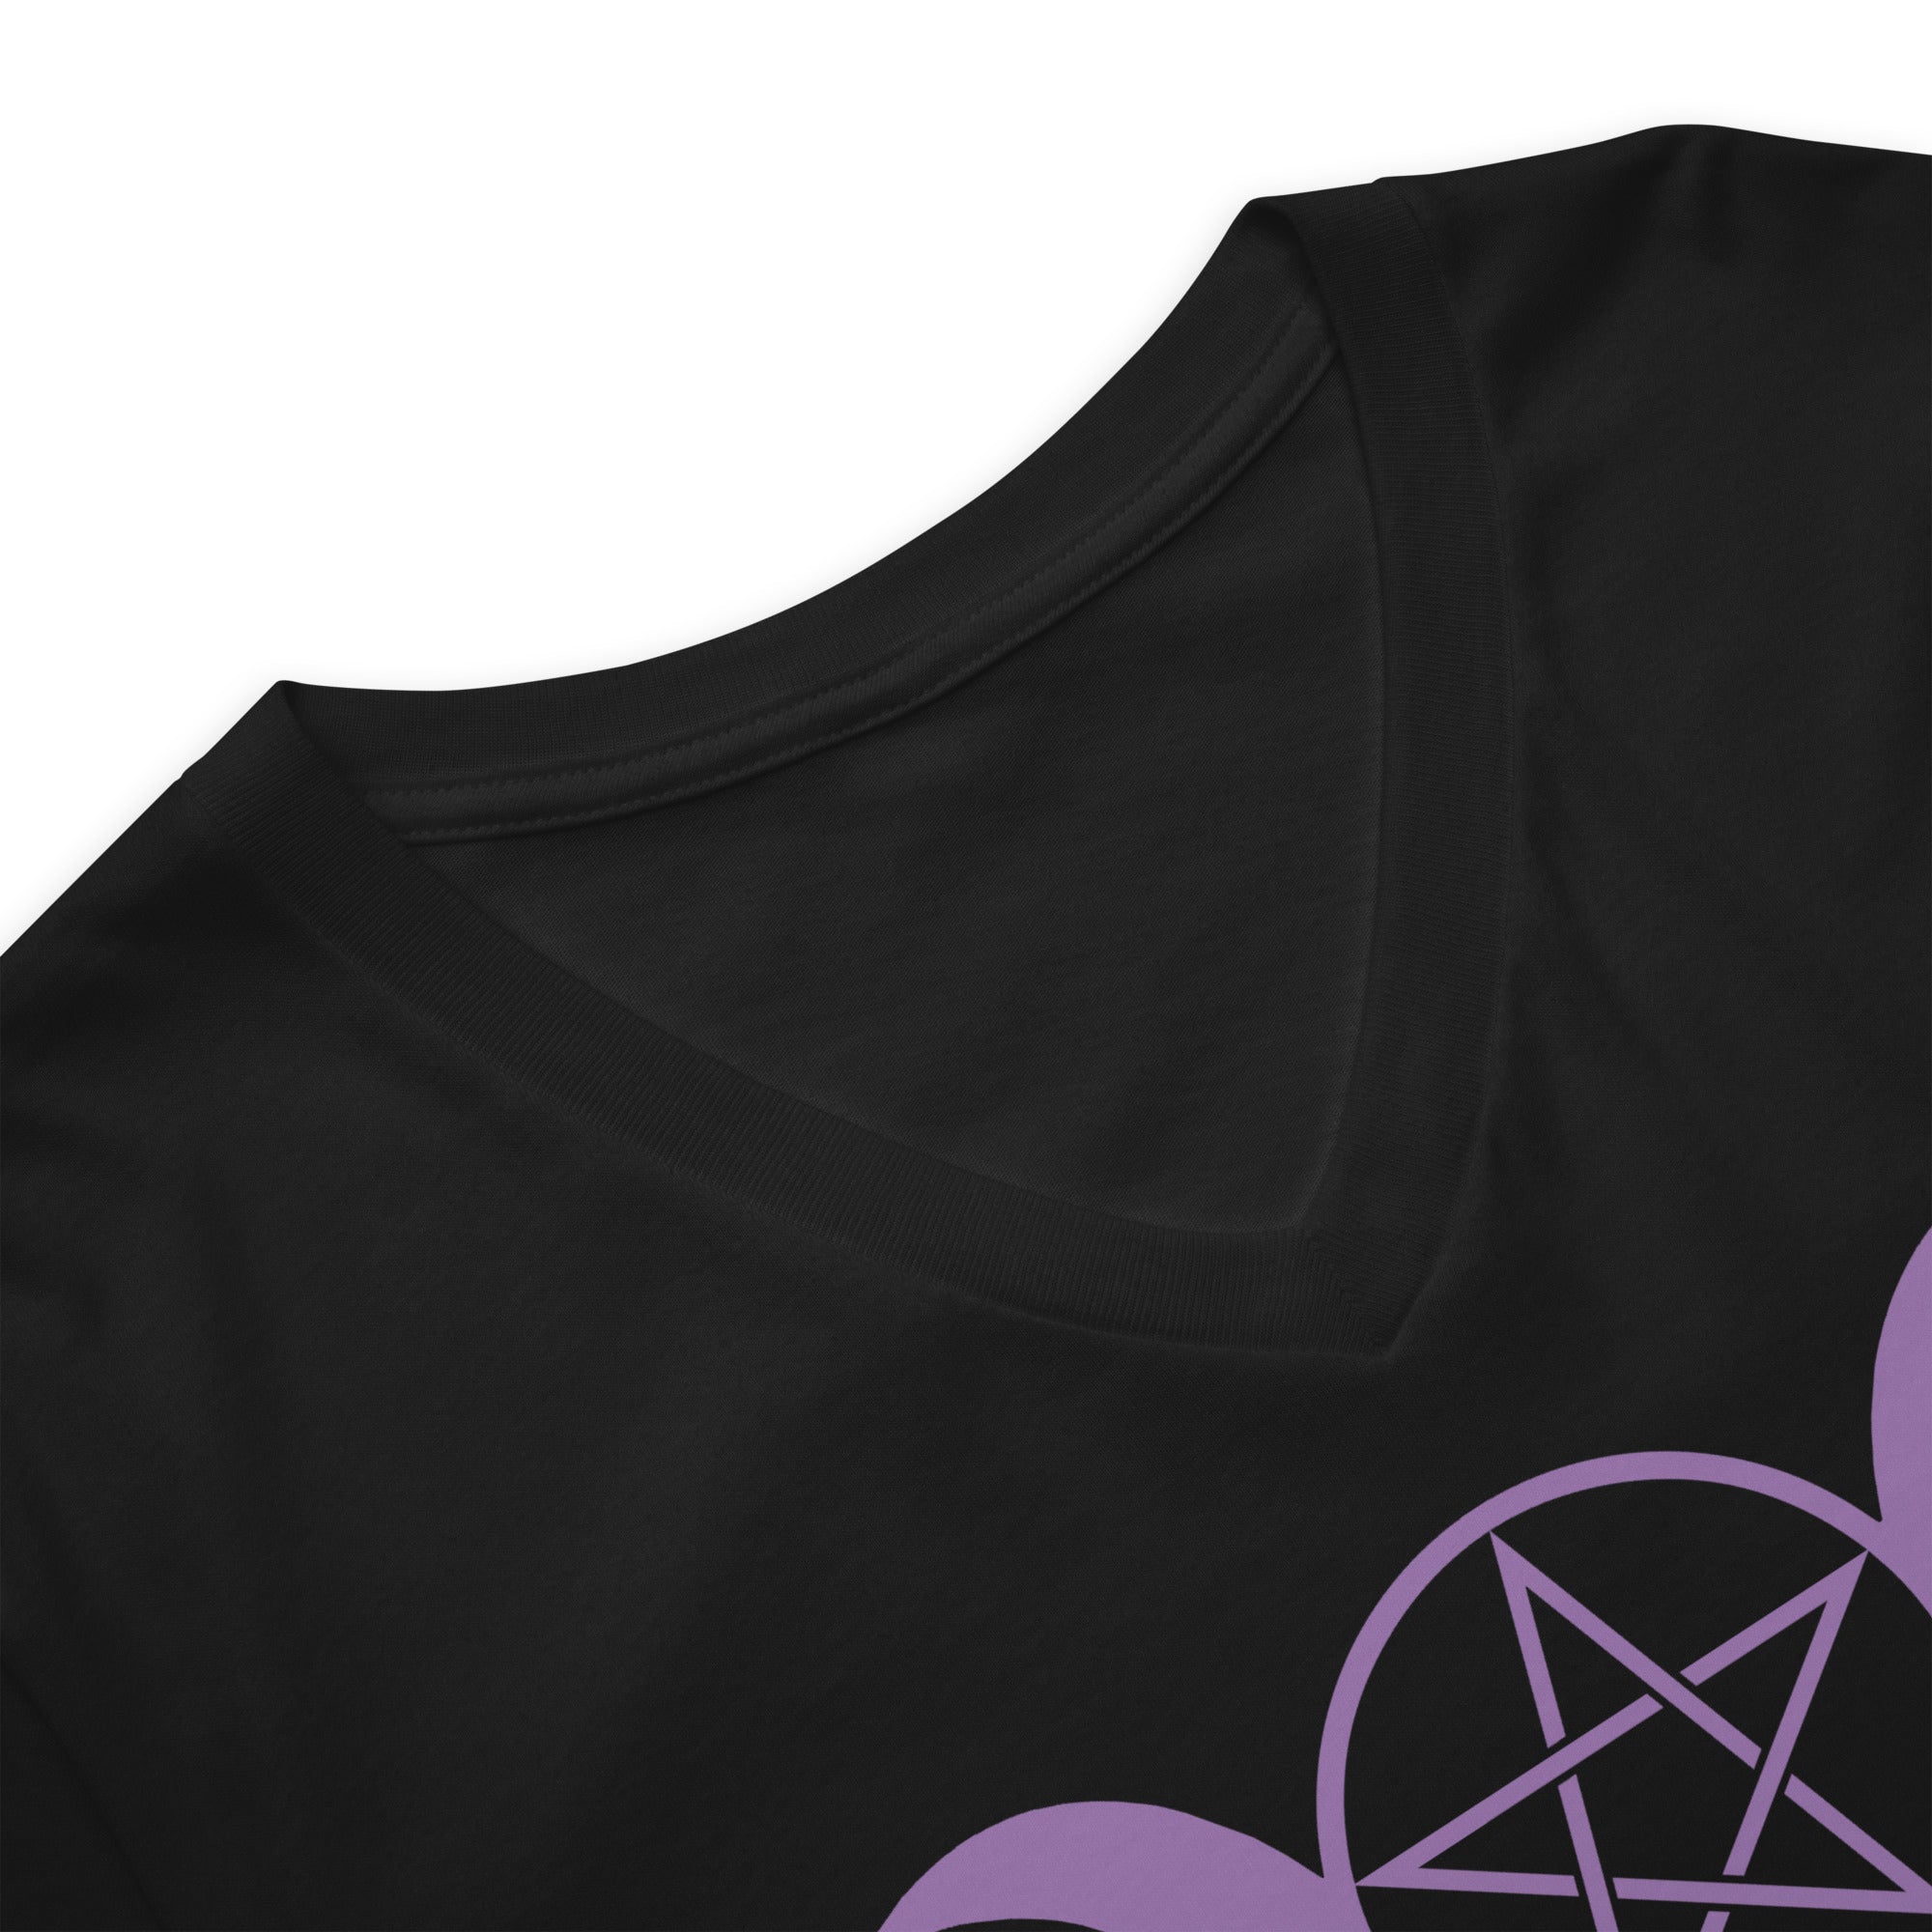 Purple Triple Moon Goddess Wiccan Pagan Symbol Women’s Short Sleeve V-Neck T-Shirt